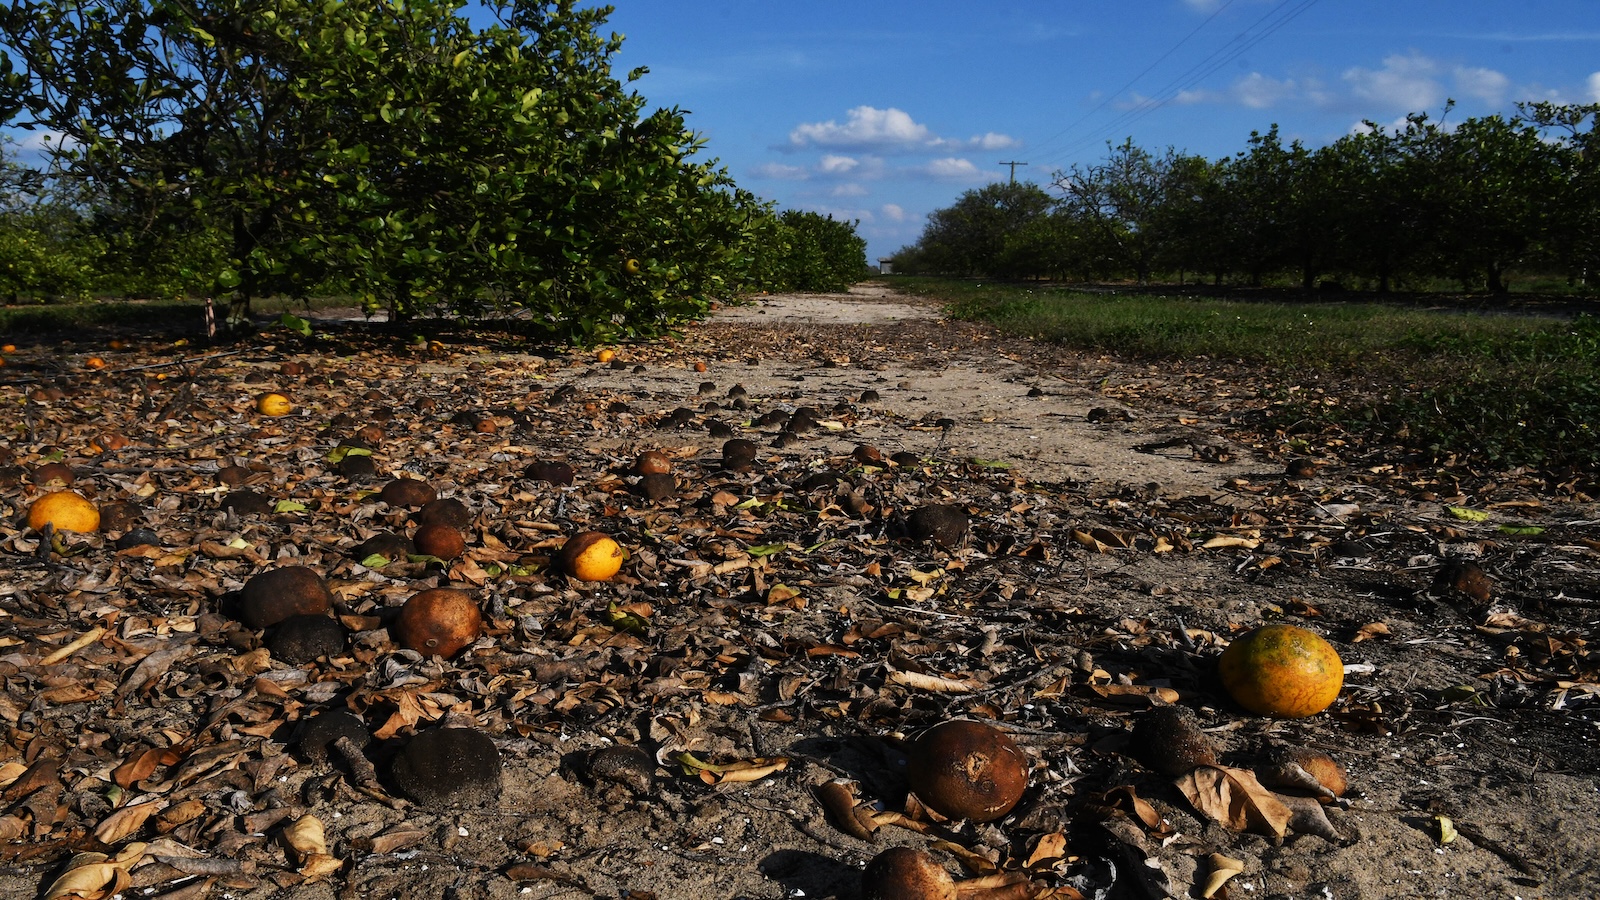 Can Florida’s orange growers survive another hurricane season?